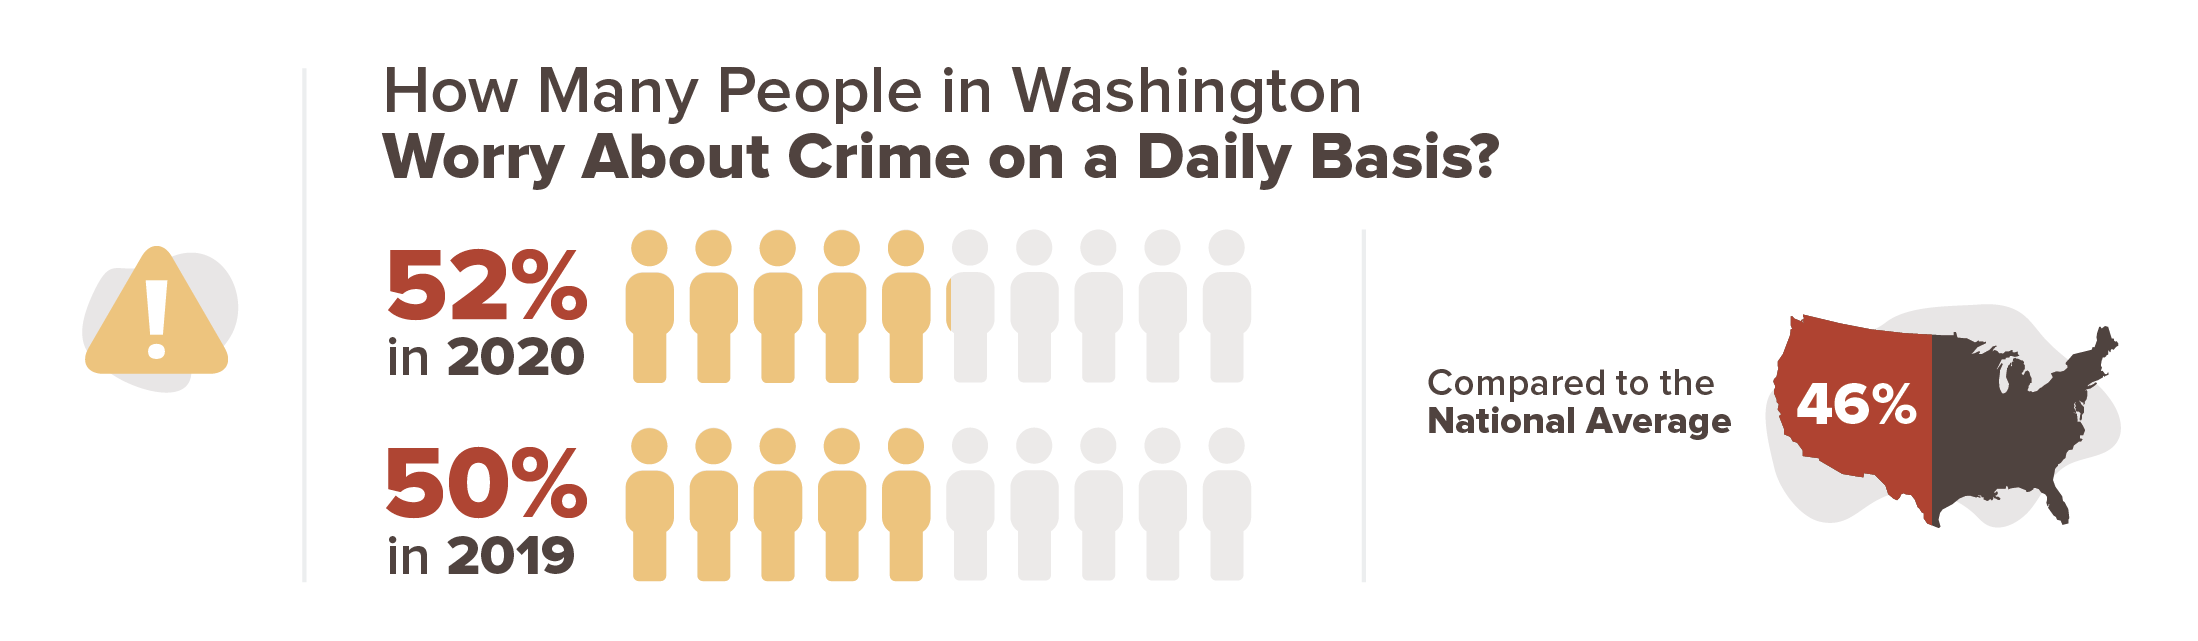 Washington crime concern infographic